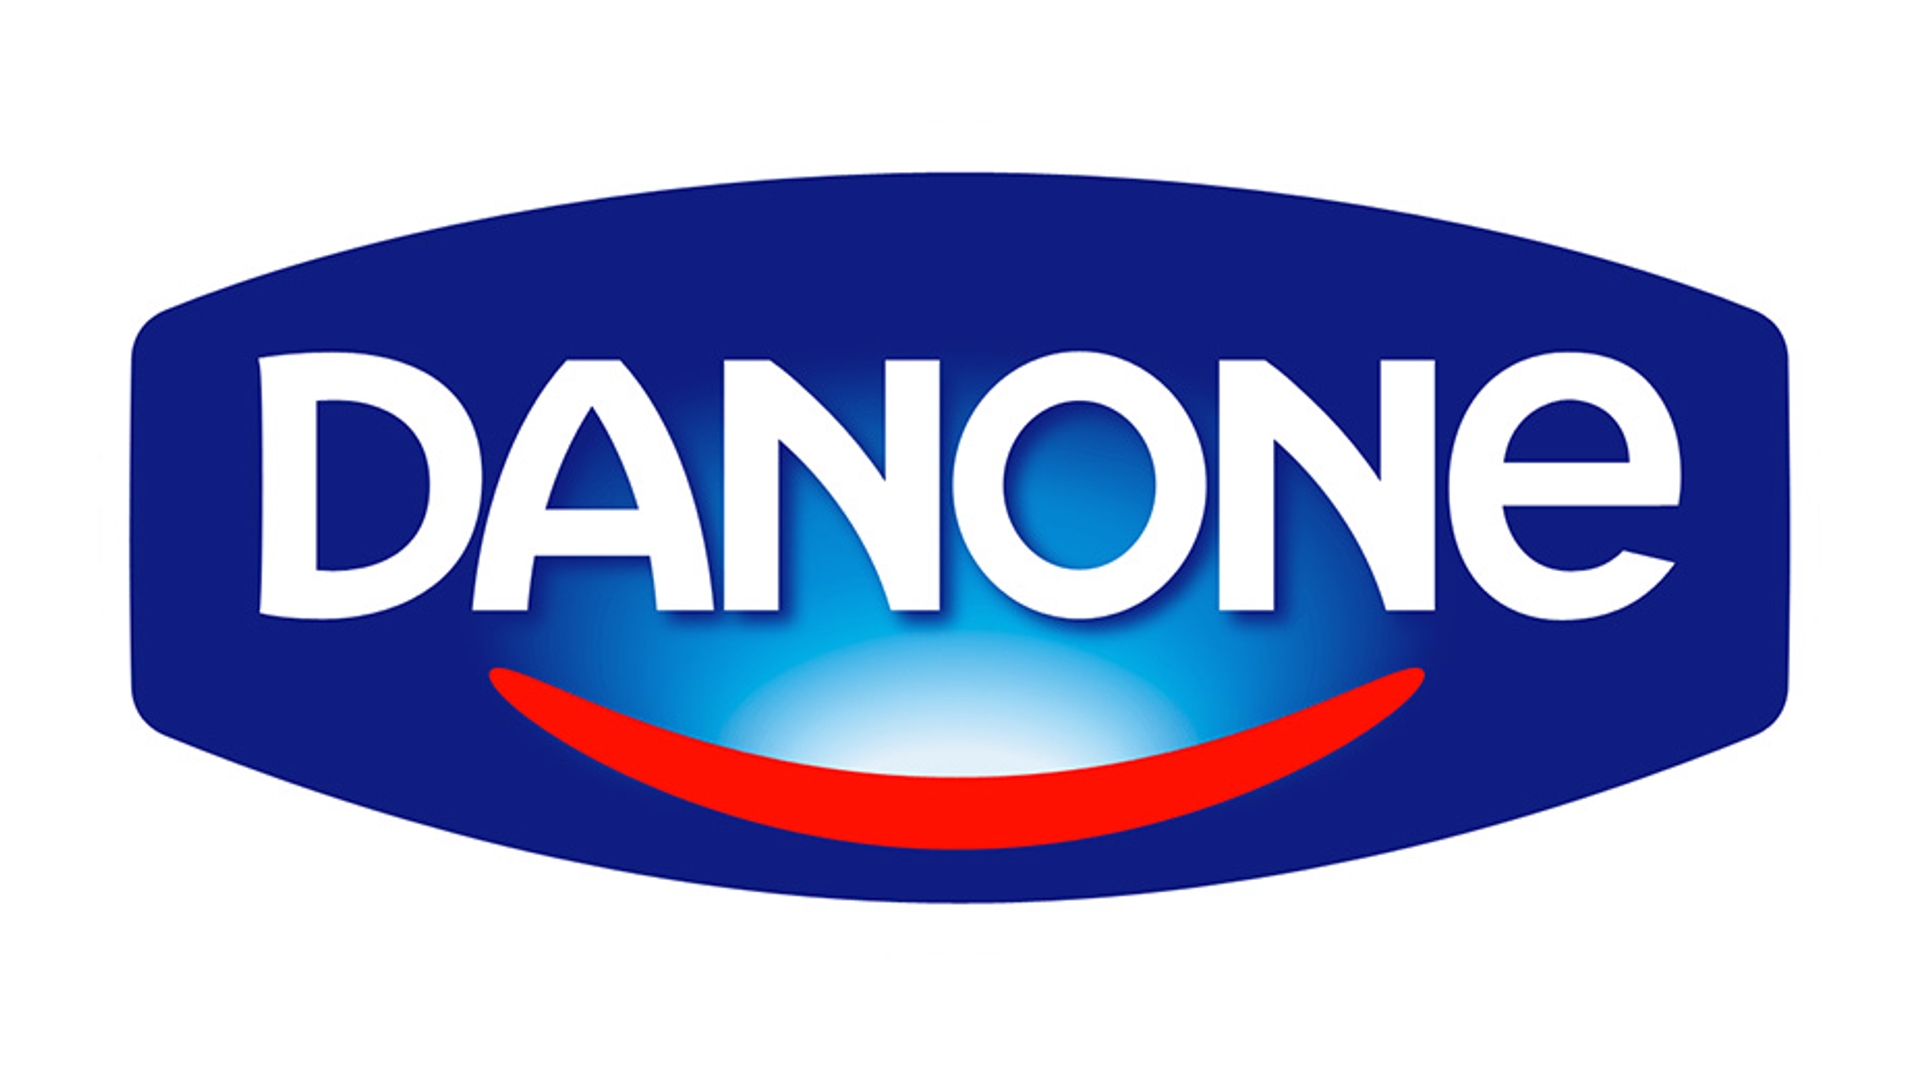 Danone-logo-930-520